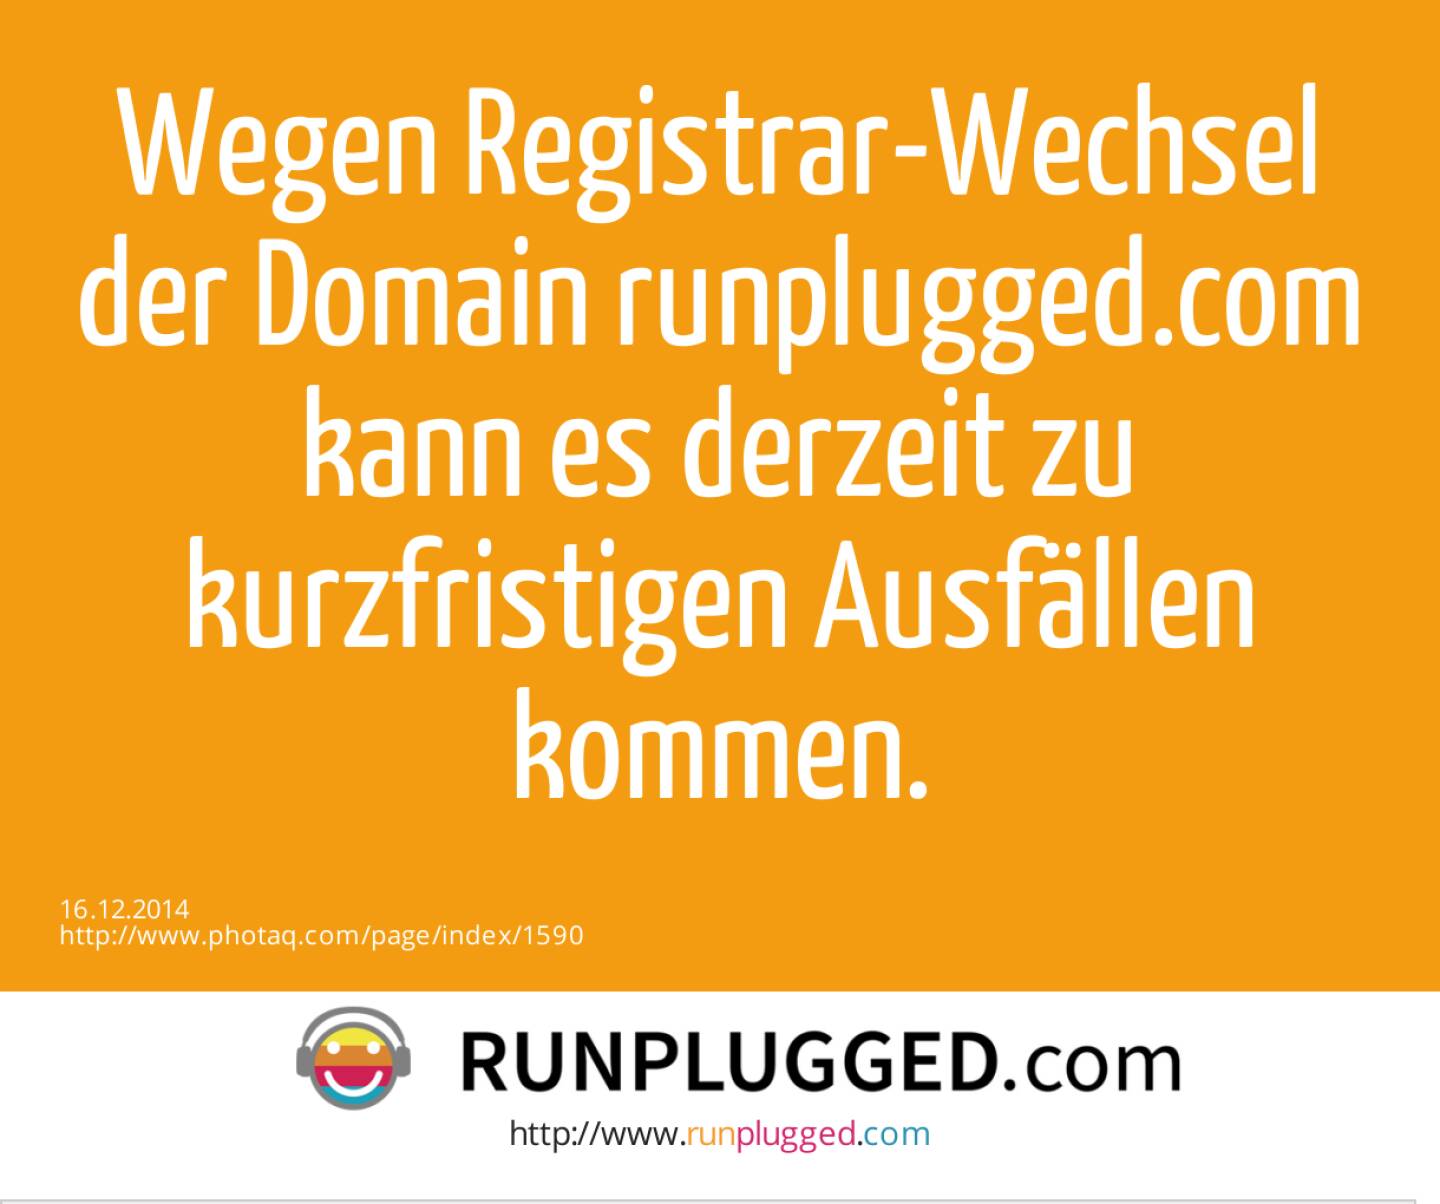 Wegen Registrar-Wechsel der Domain runplugged.com kann es derzeit zu kurzfristigen Ausfällen  kommen. 